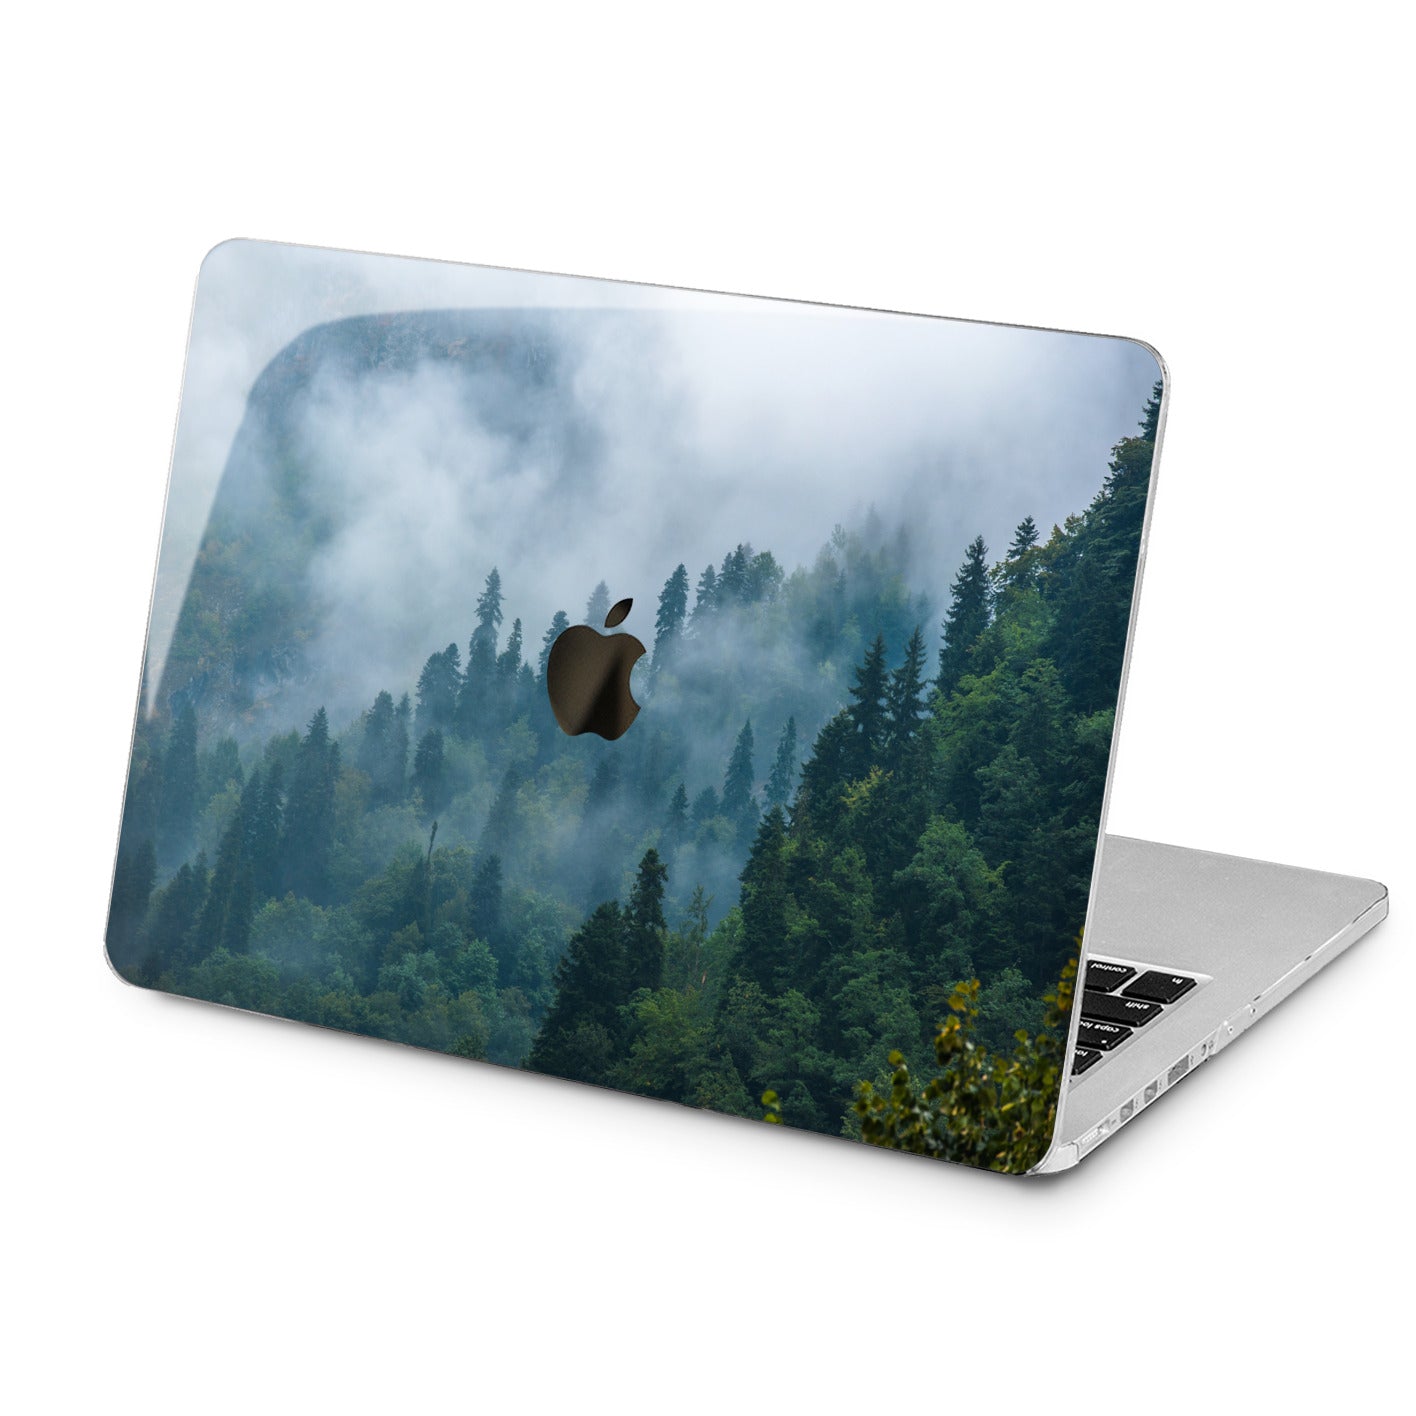 Lex Altern Lex Altern Foggy Forest Case for your Laptop Apple Macbook.